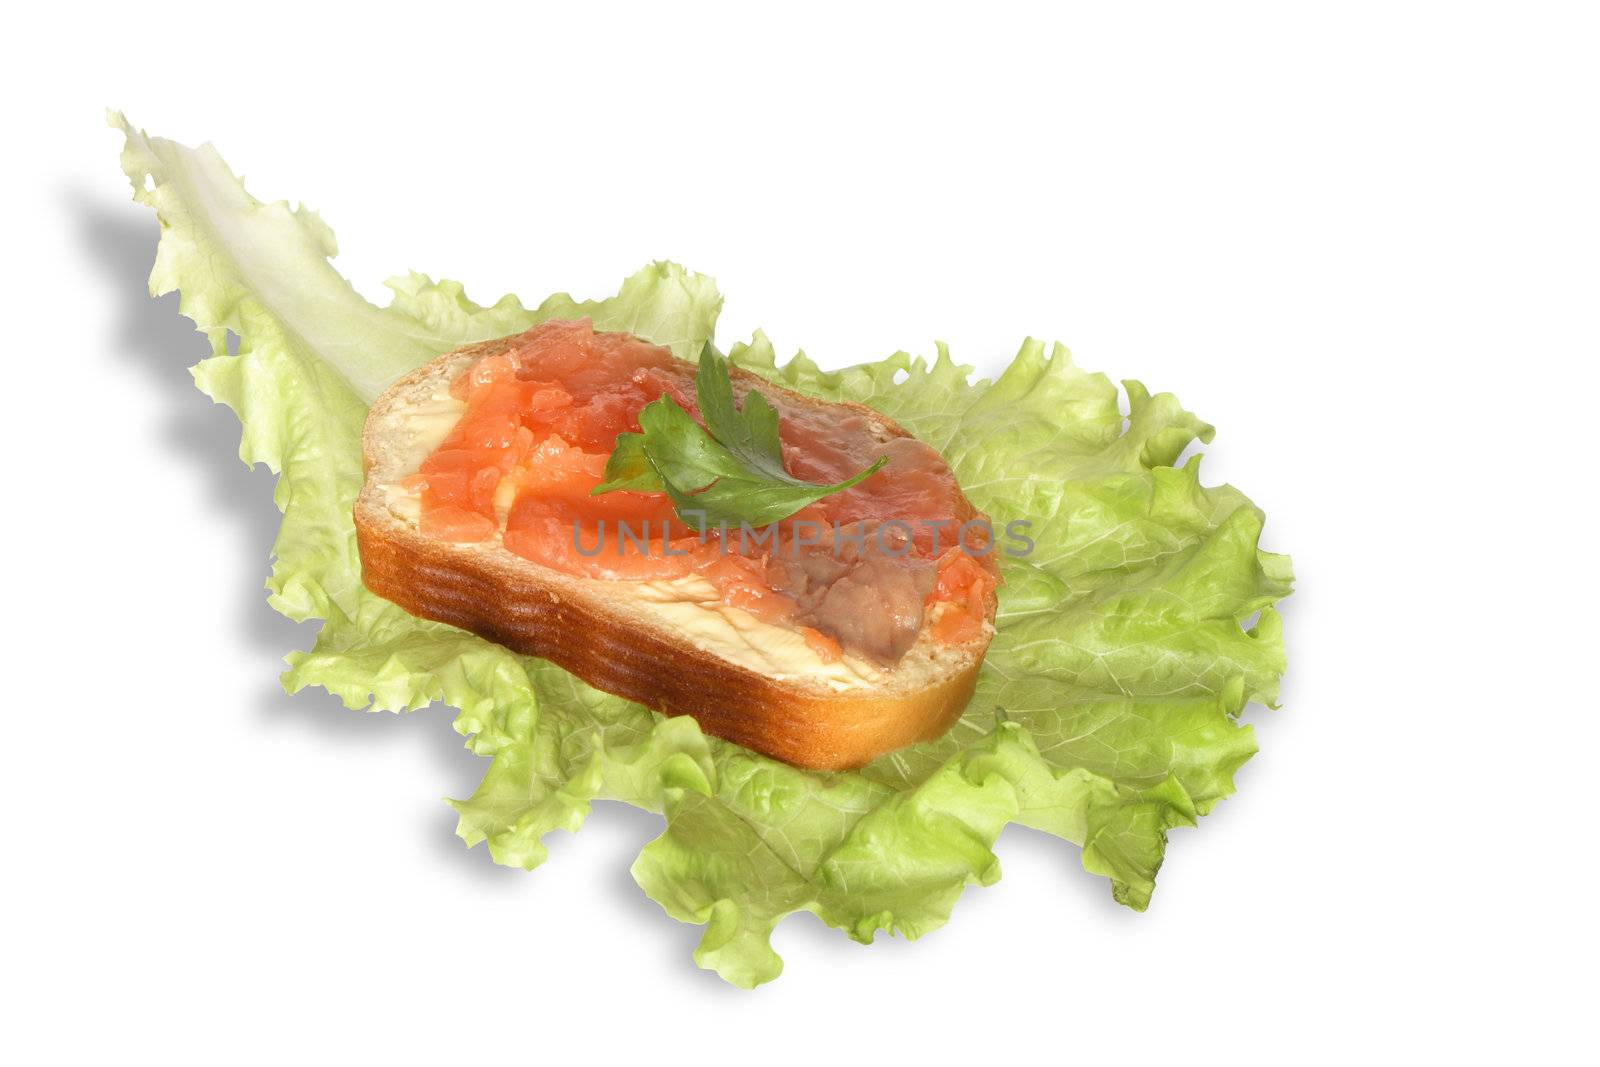 Fish Sandwich by kvkirillov